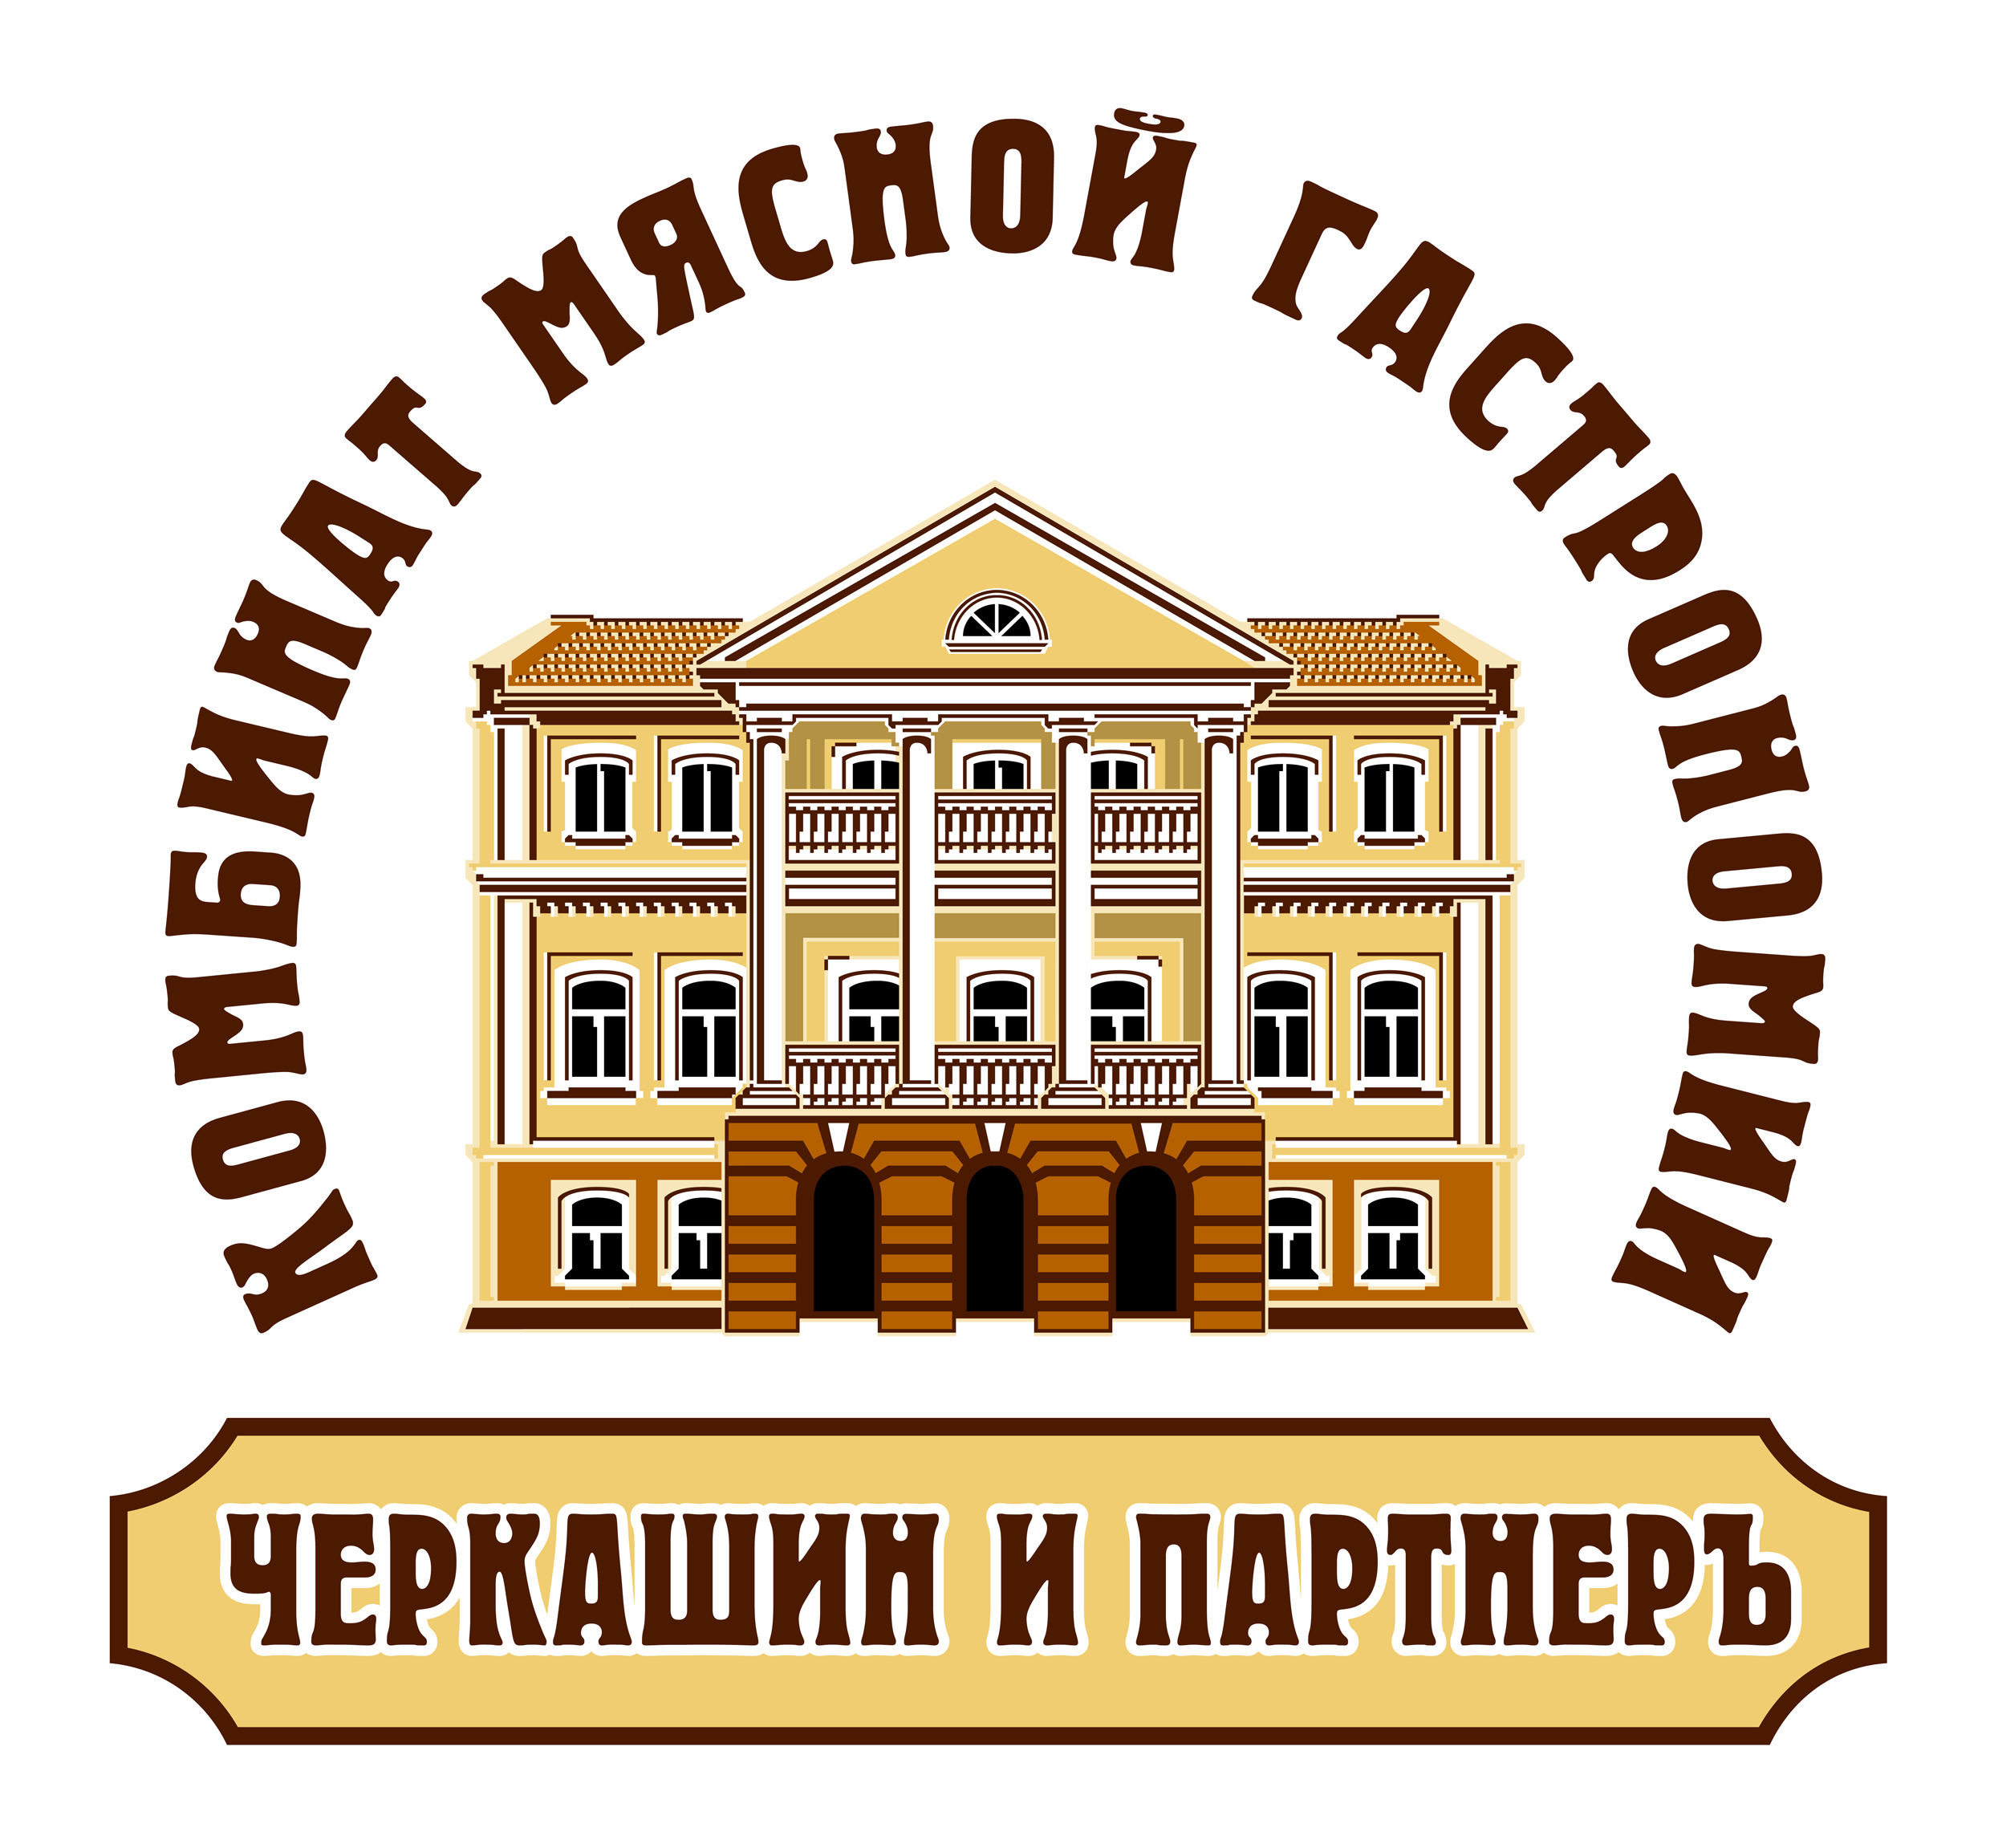 Логотип компании «Мясокомбинат «Черкашин и партнеръ»»